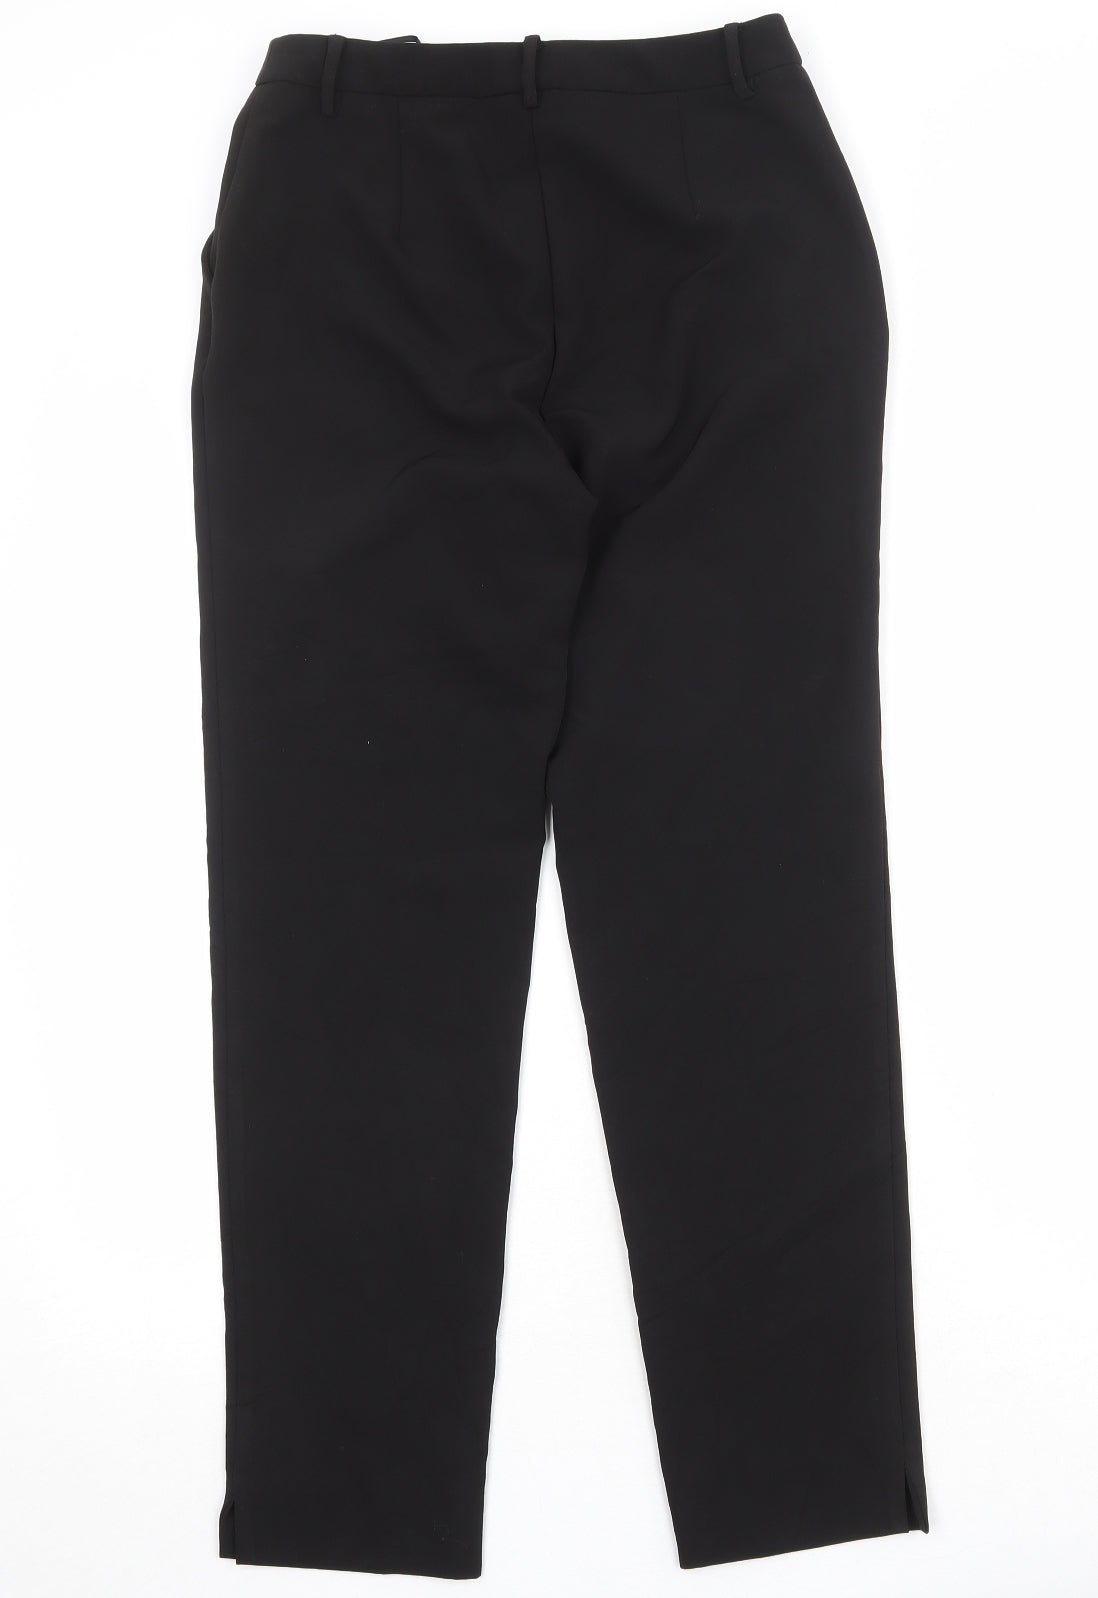 Warehouse Womens Black Polyester Trousers Size 10 Regular Zip